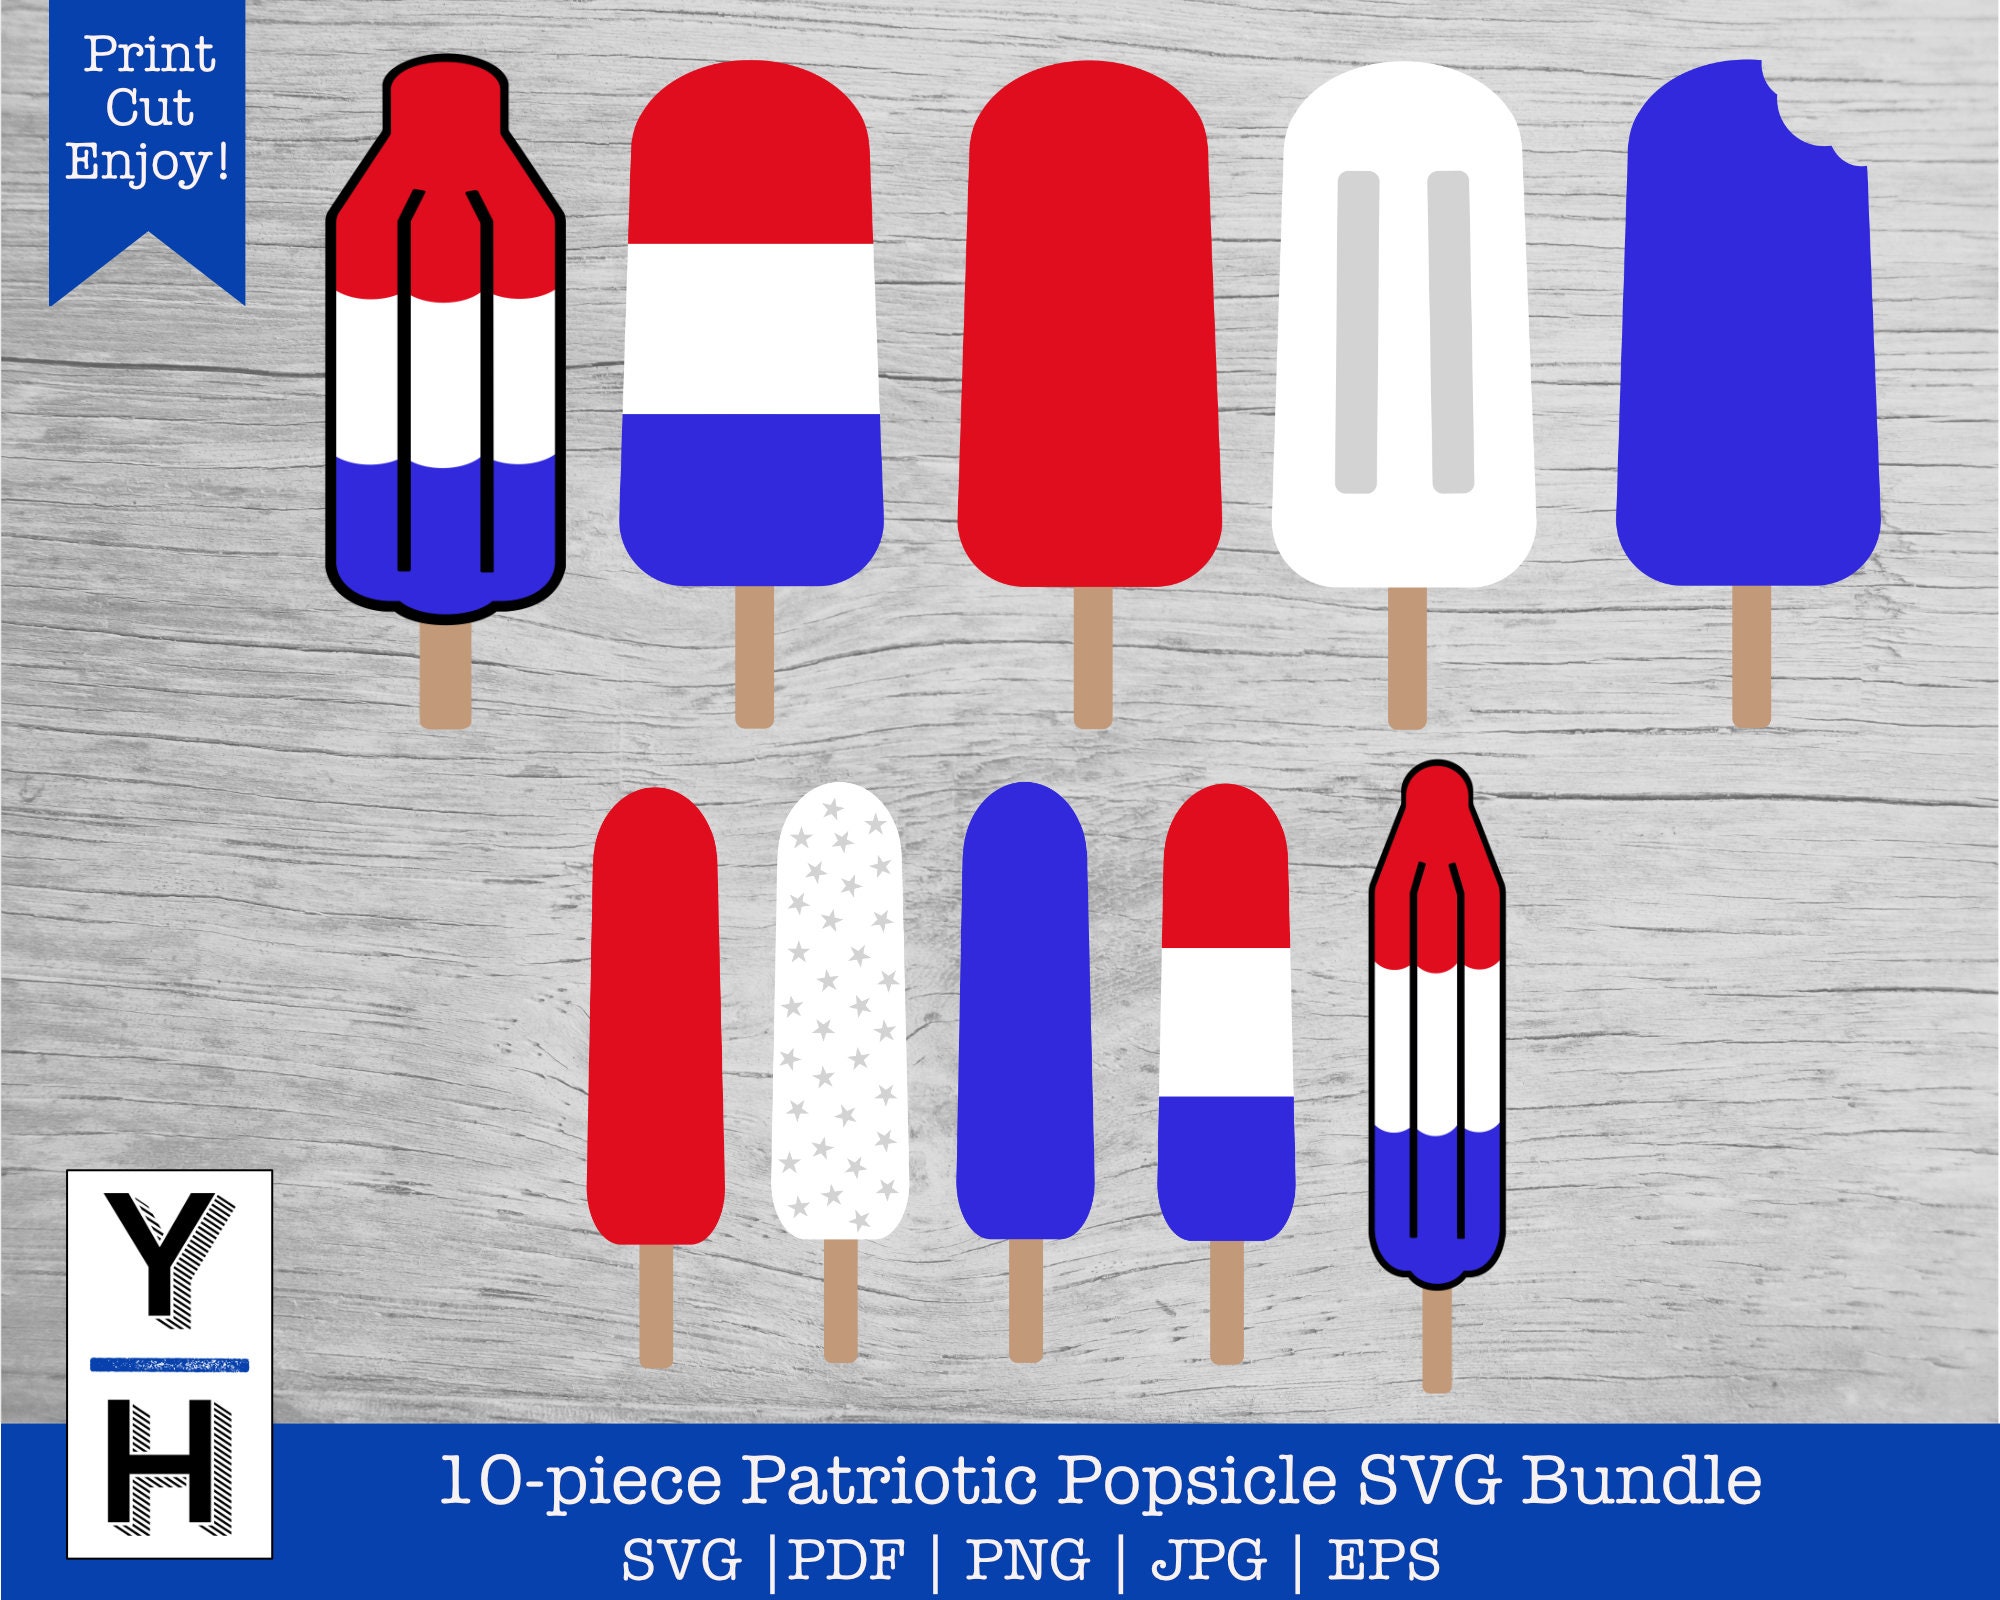 Patriotic Star Popsicle Molds - 2 Pc.